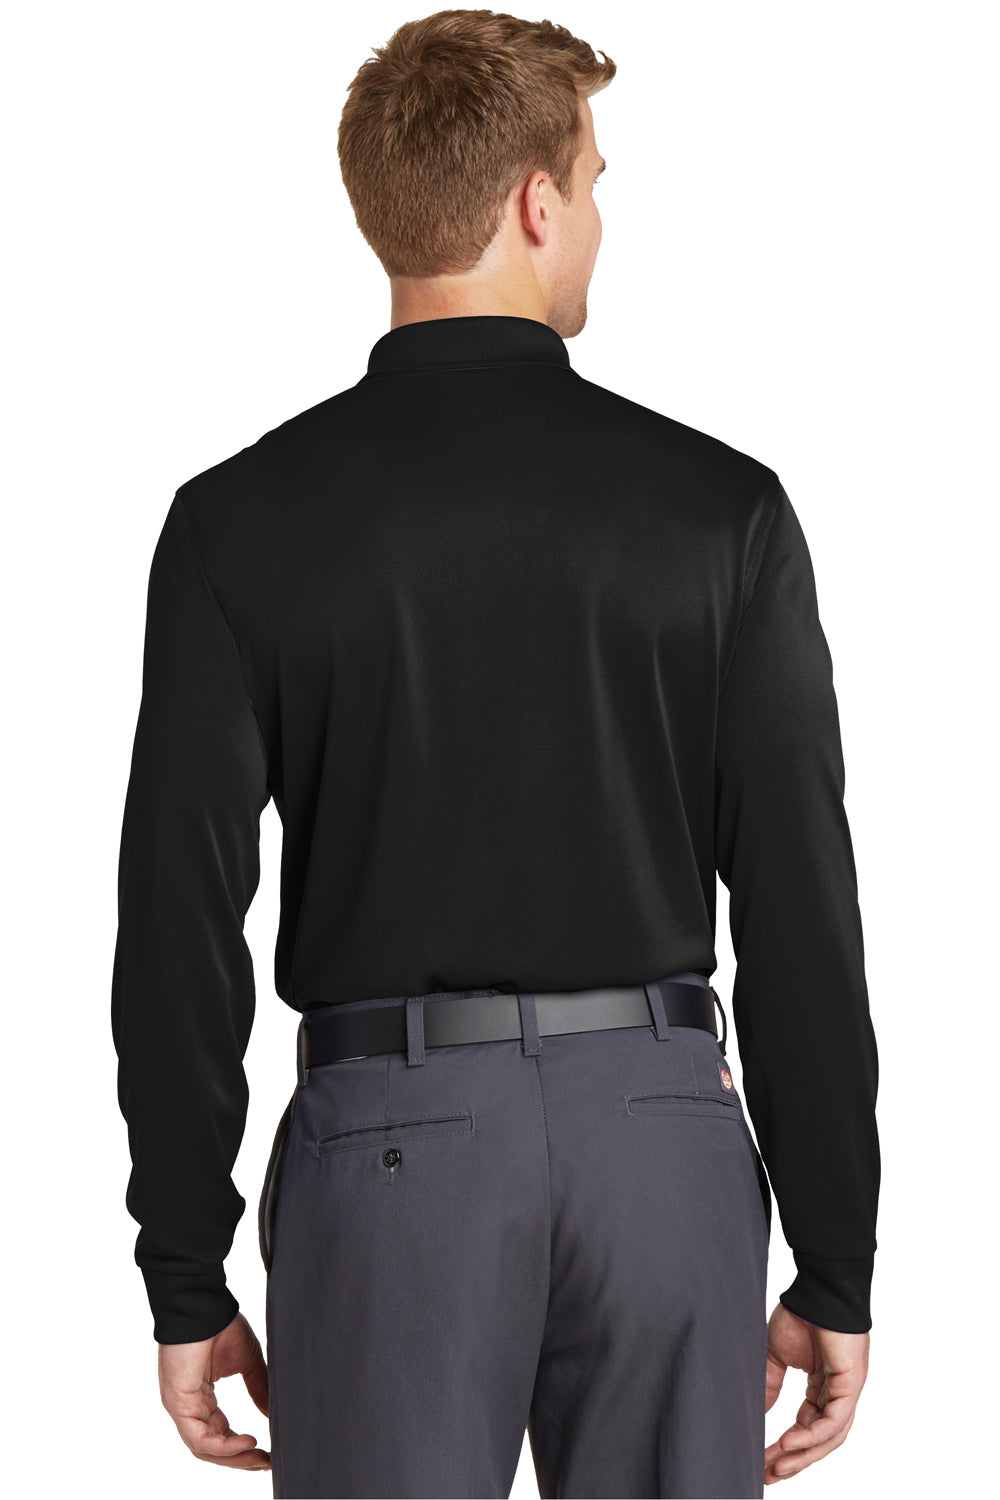 CornerStone CS412LS Mens Select Moisture Wicking Long Sleeve Polo Shirt Black Back